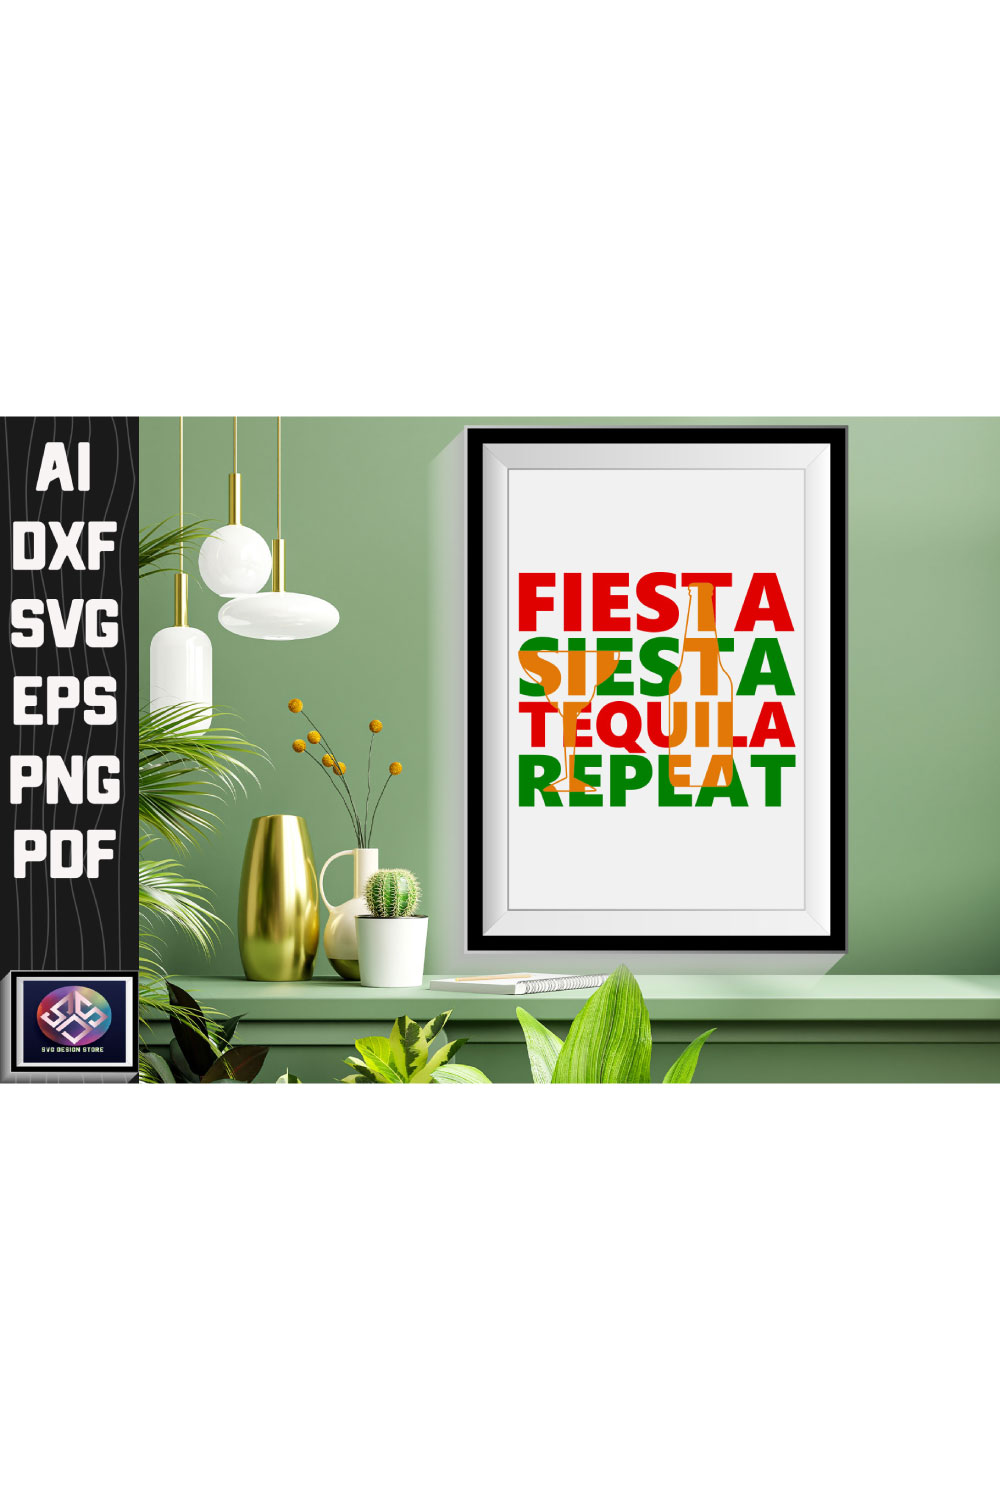 Fiesta Siesta Tequila Repeat pinterest preview image.